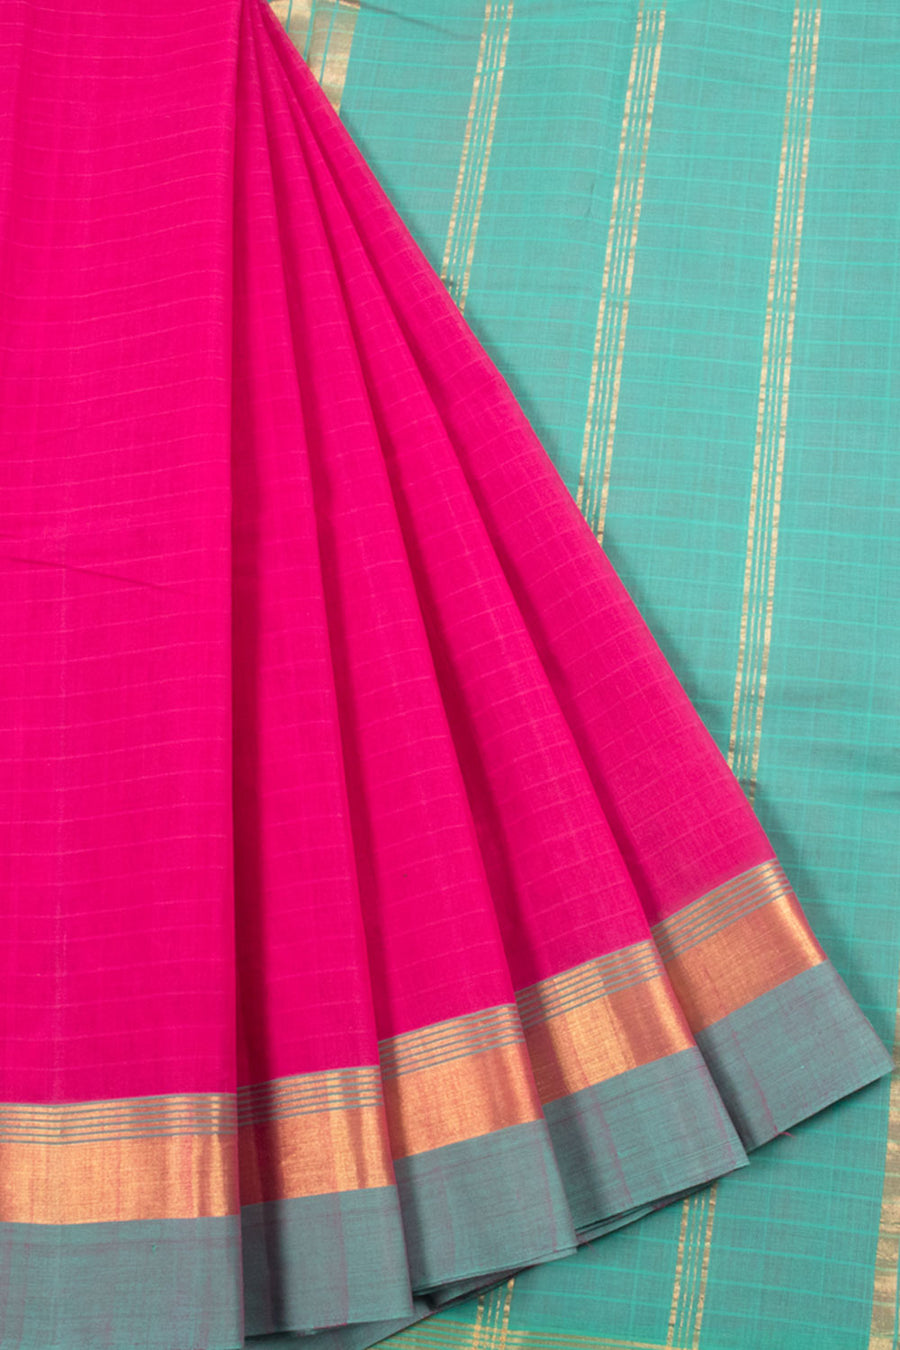 Magenta Handwoven Negamam Cotton Saree with Stripes Design, Zari Border and Contrast Blouse and Pallu